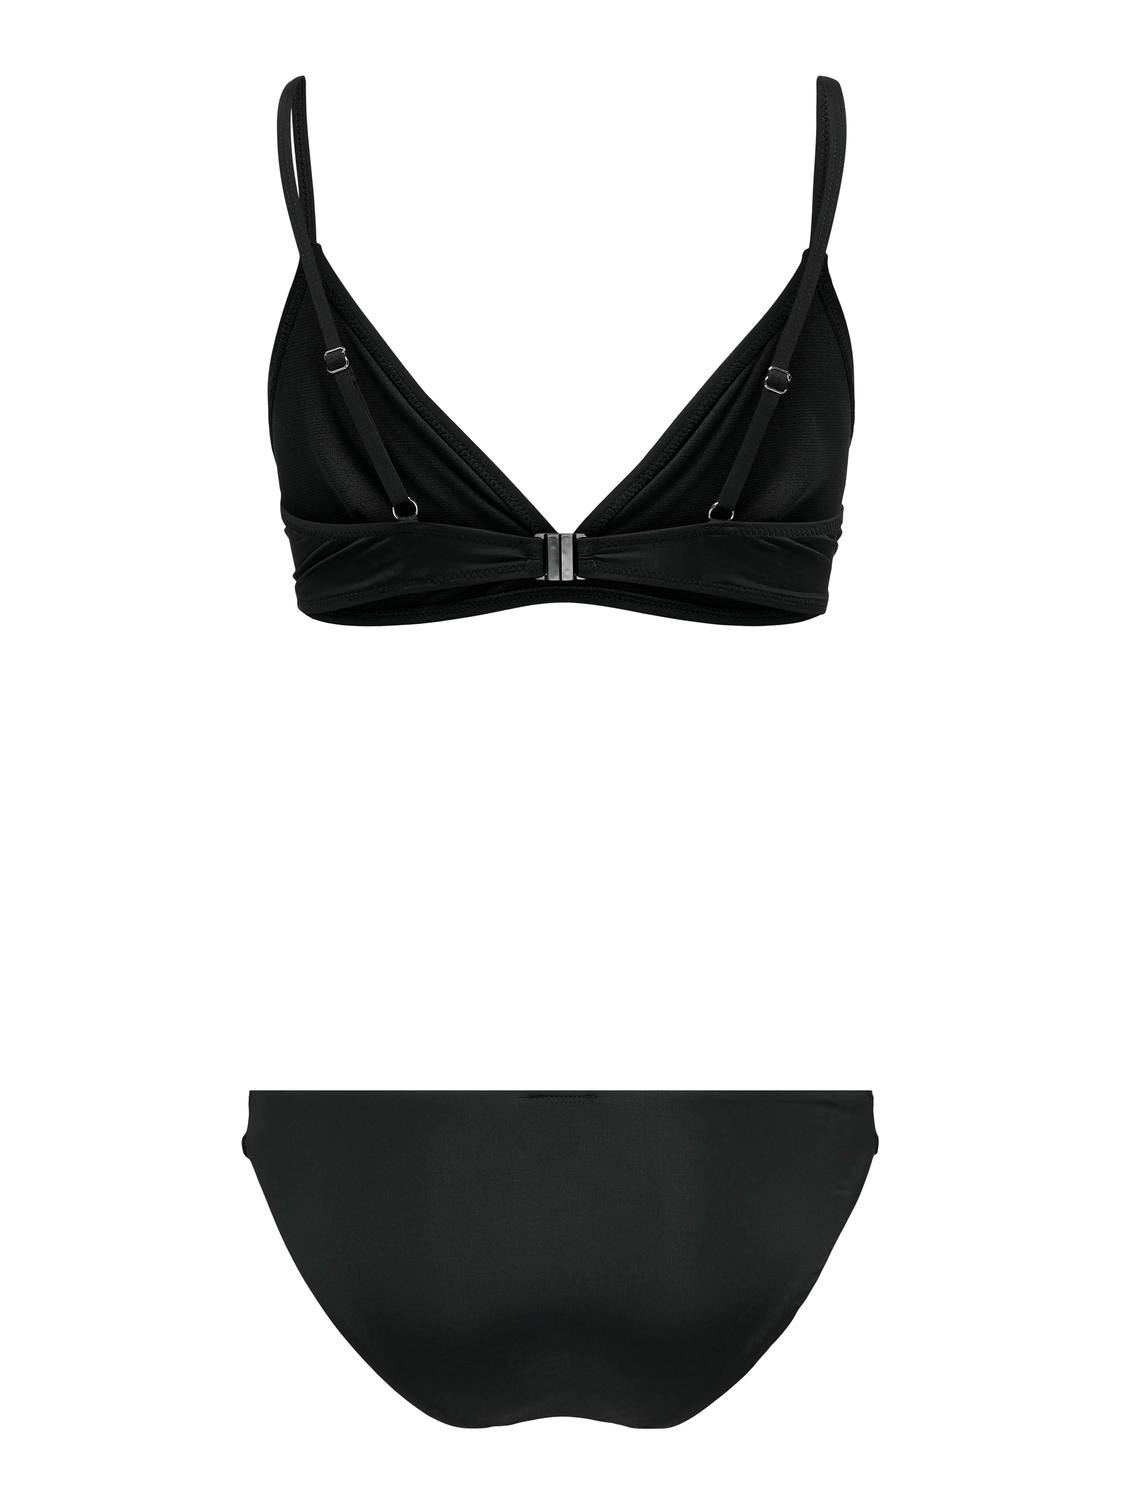 ONLY Solid Colored Triangle Bikini Set -Black - 15259463